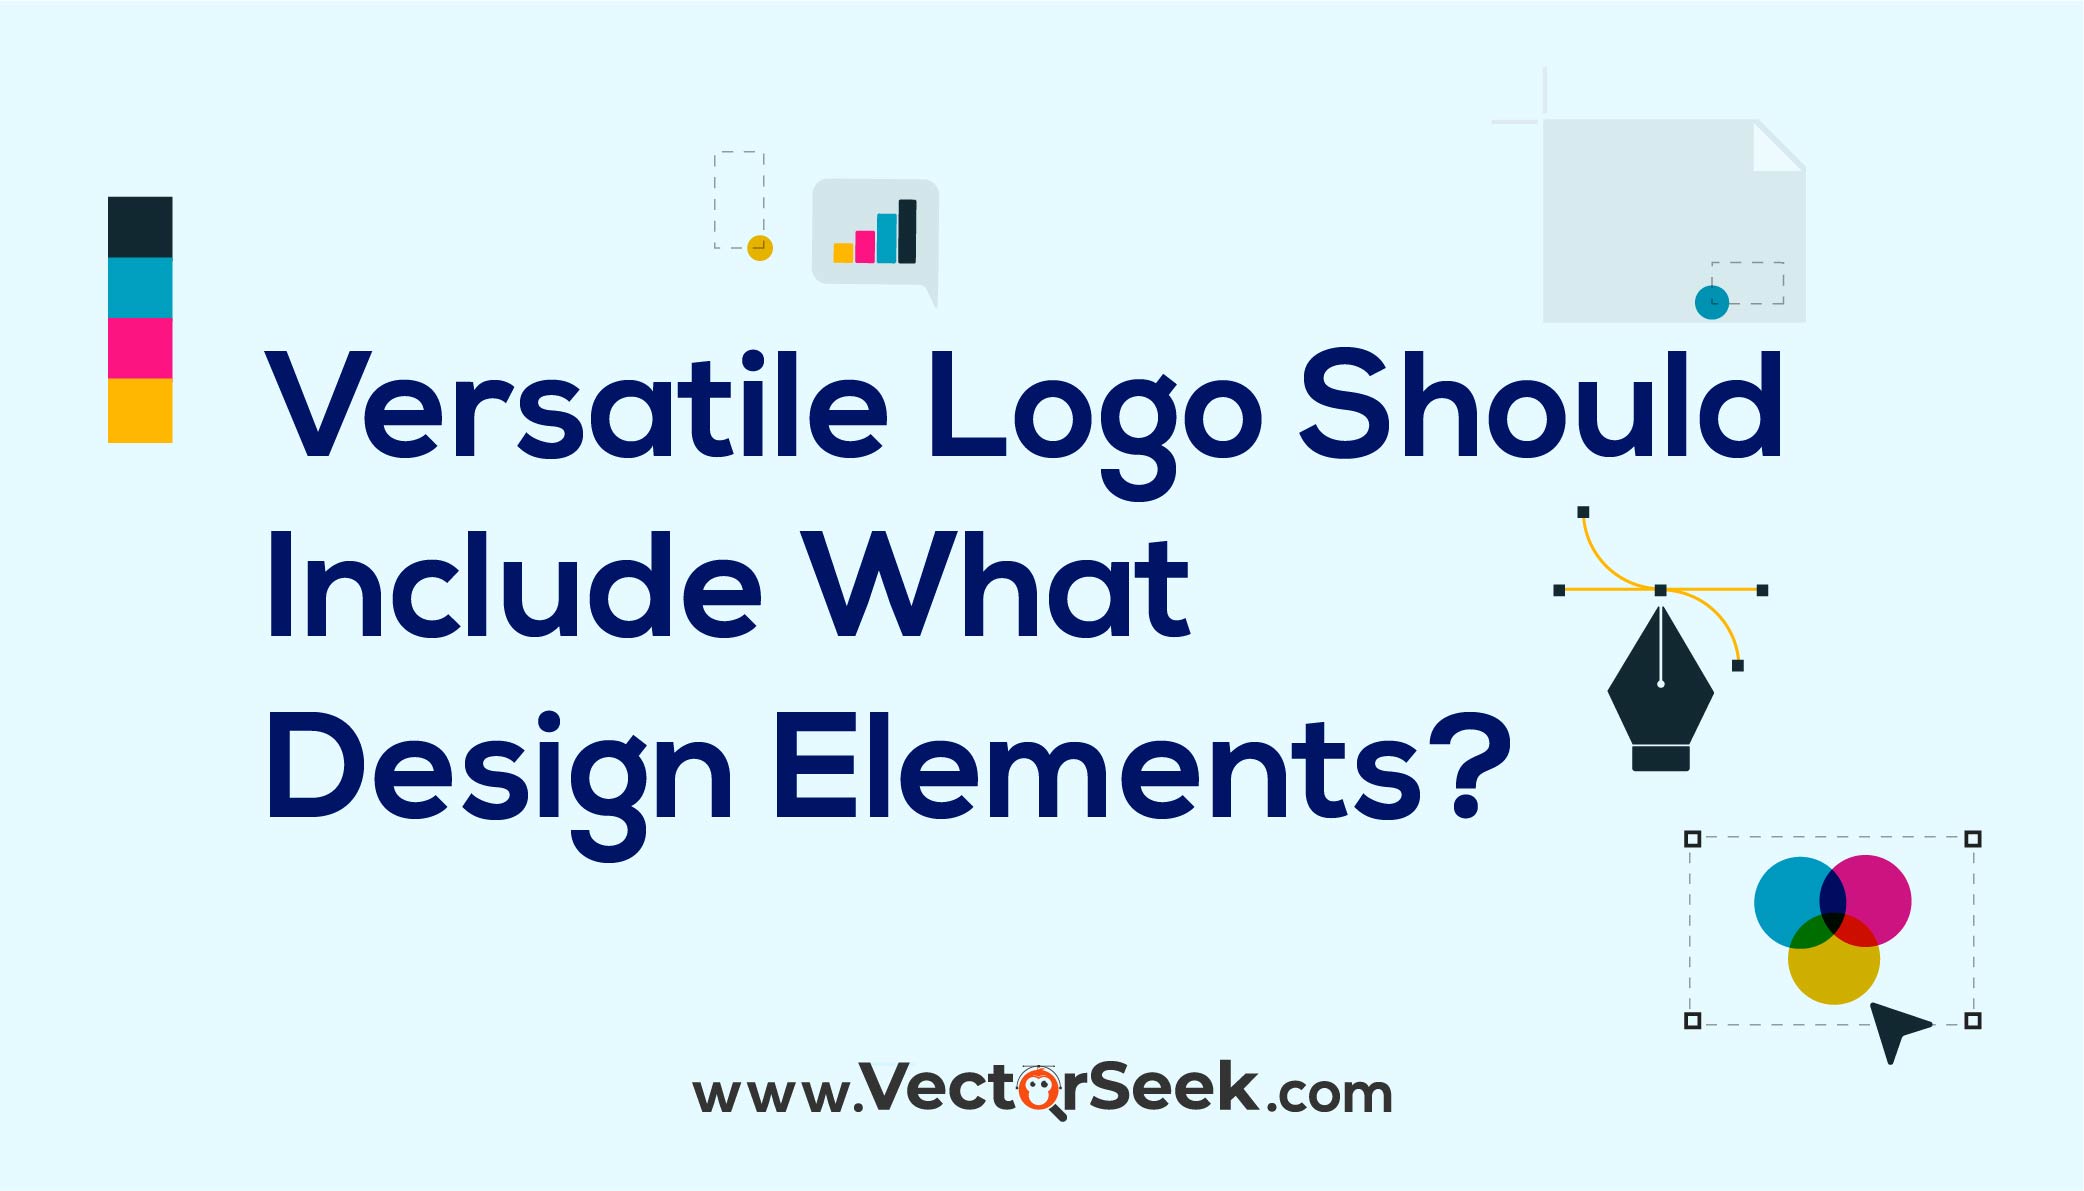 Versatile Logo Should Include What Design Elements?